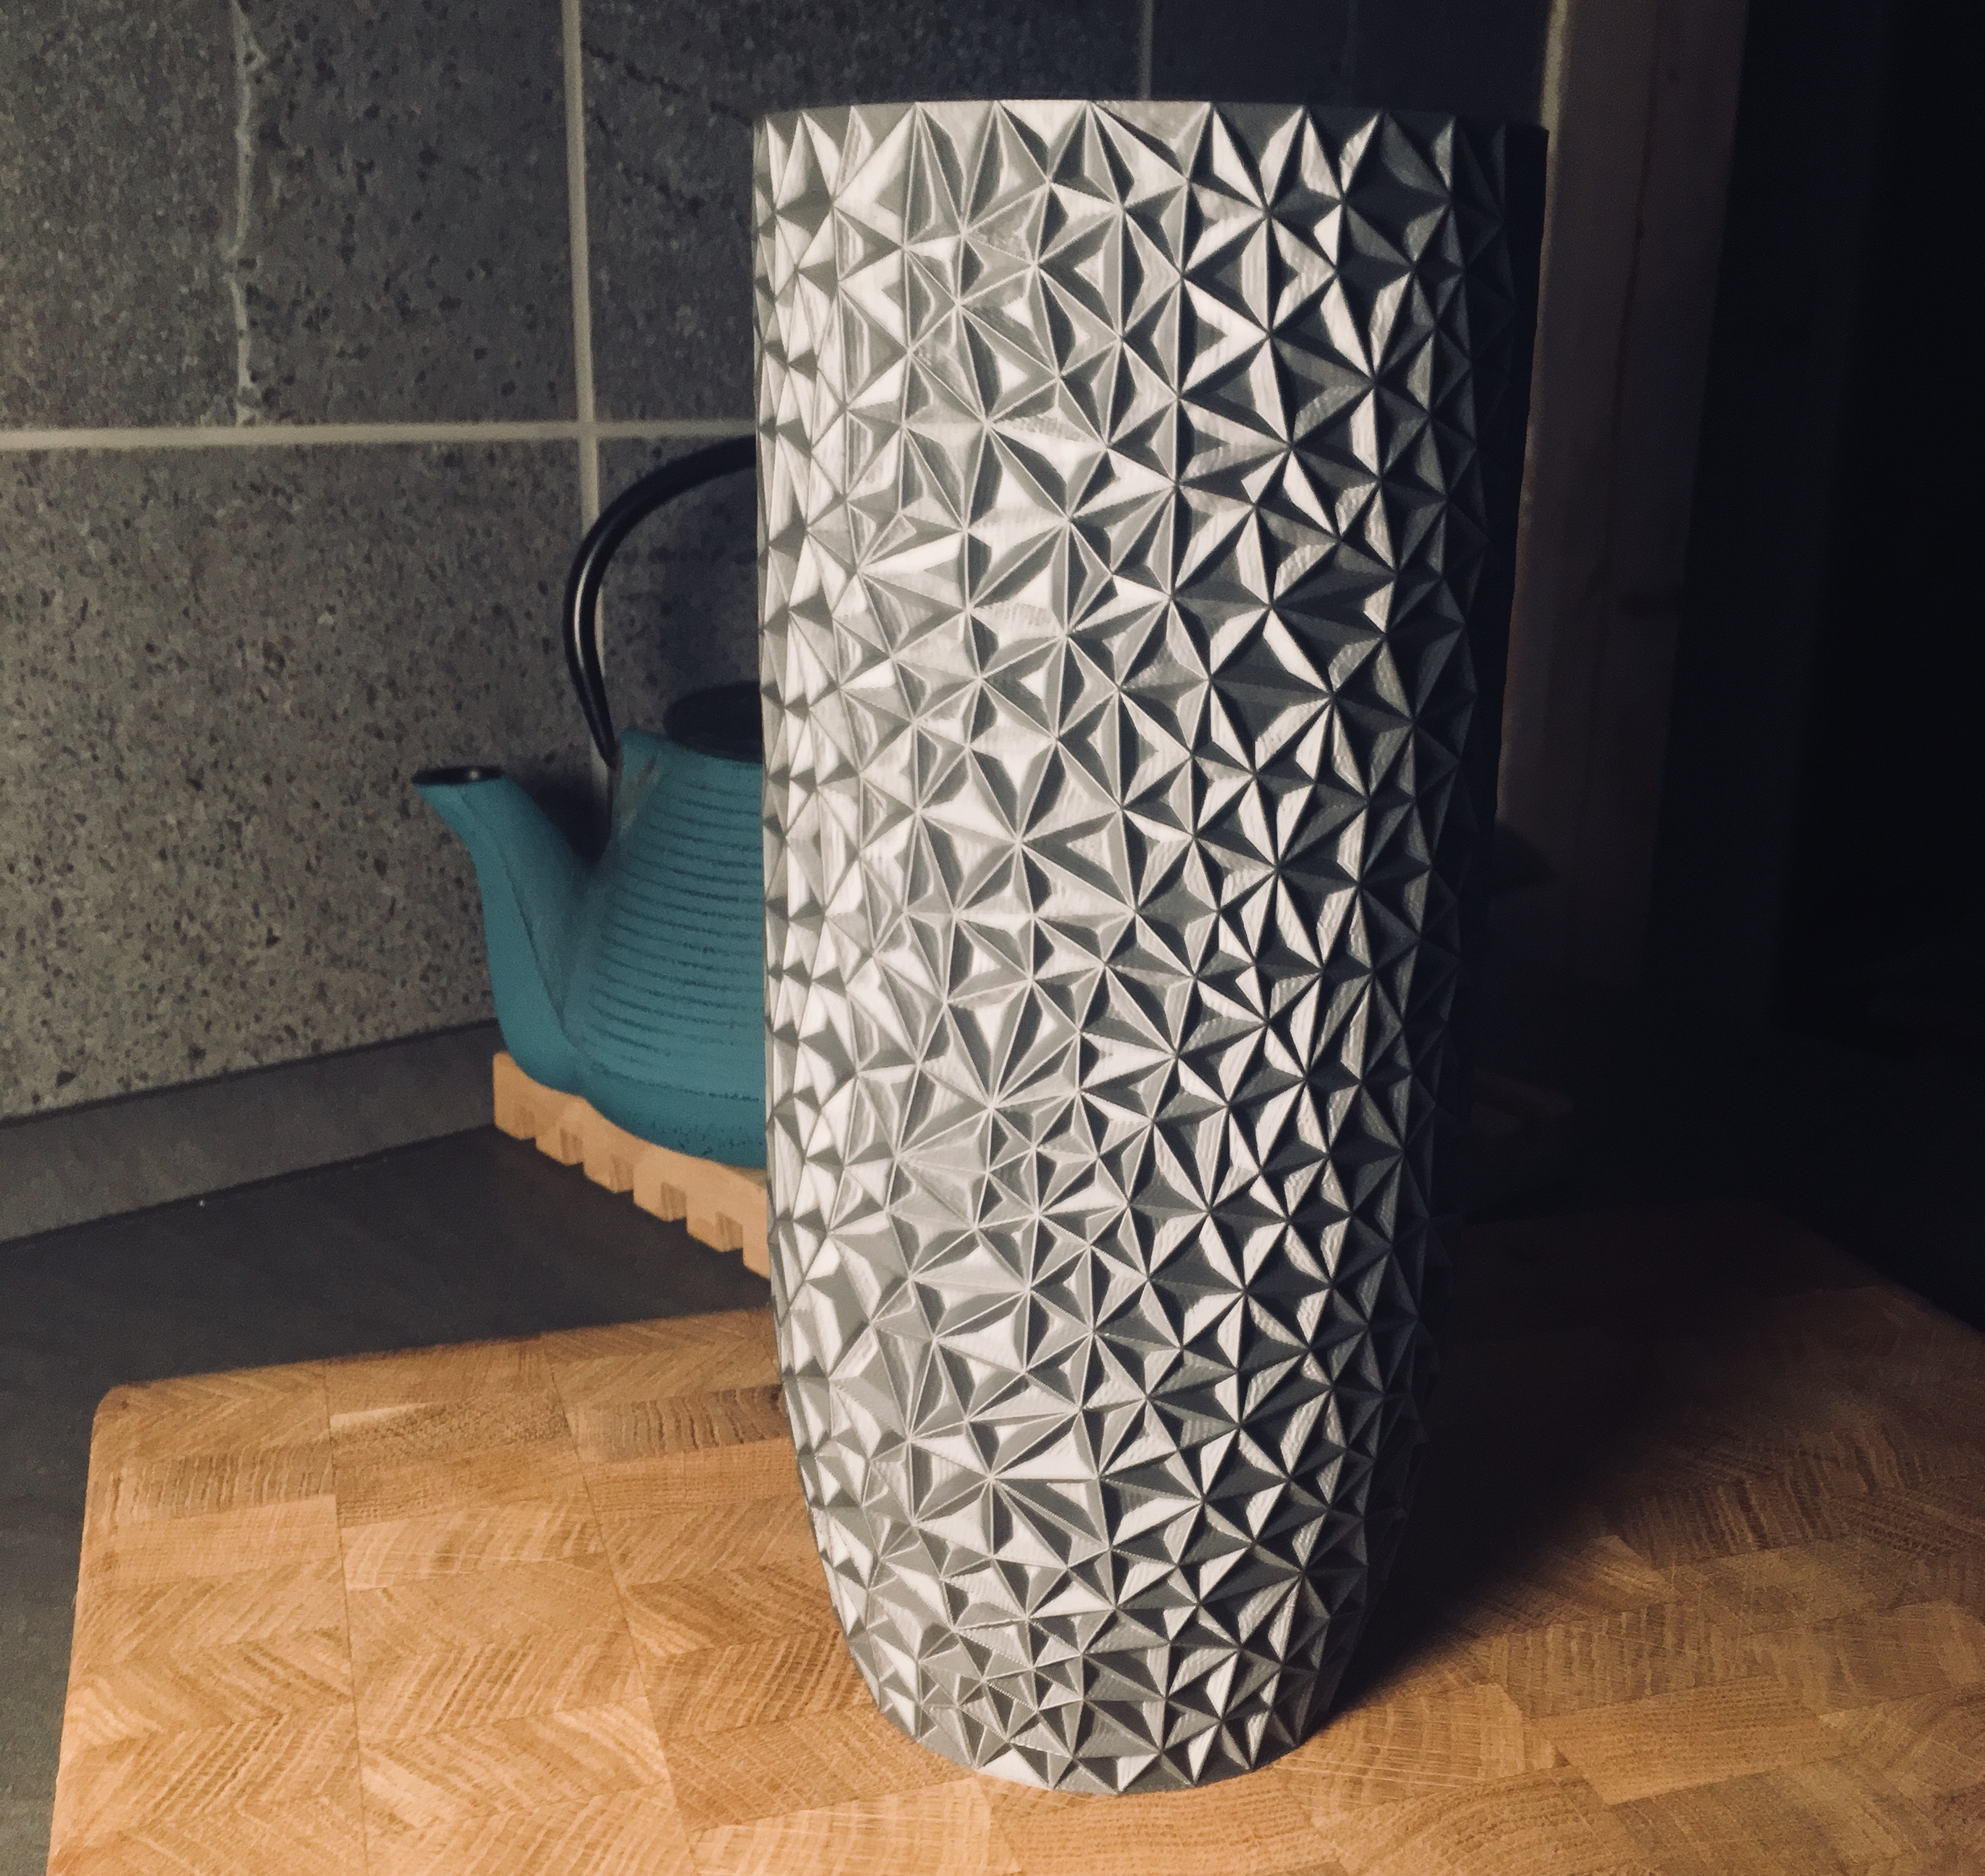 12 Fantastic Large Teal Vase 2024 free download large teal vase of polygon vase by antonin nosek thingiverse for by antonin nosek jan 13 2018 view original